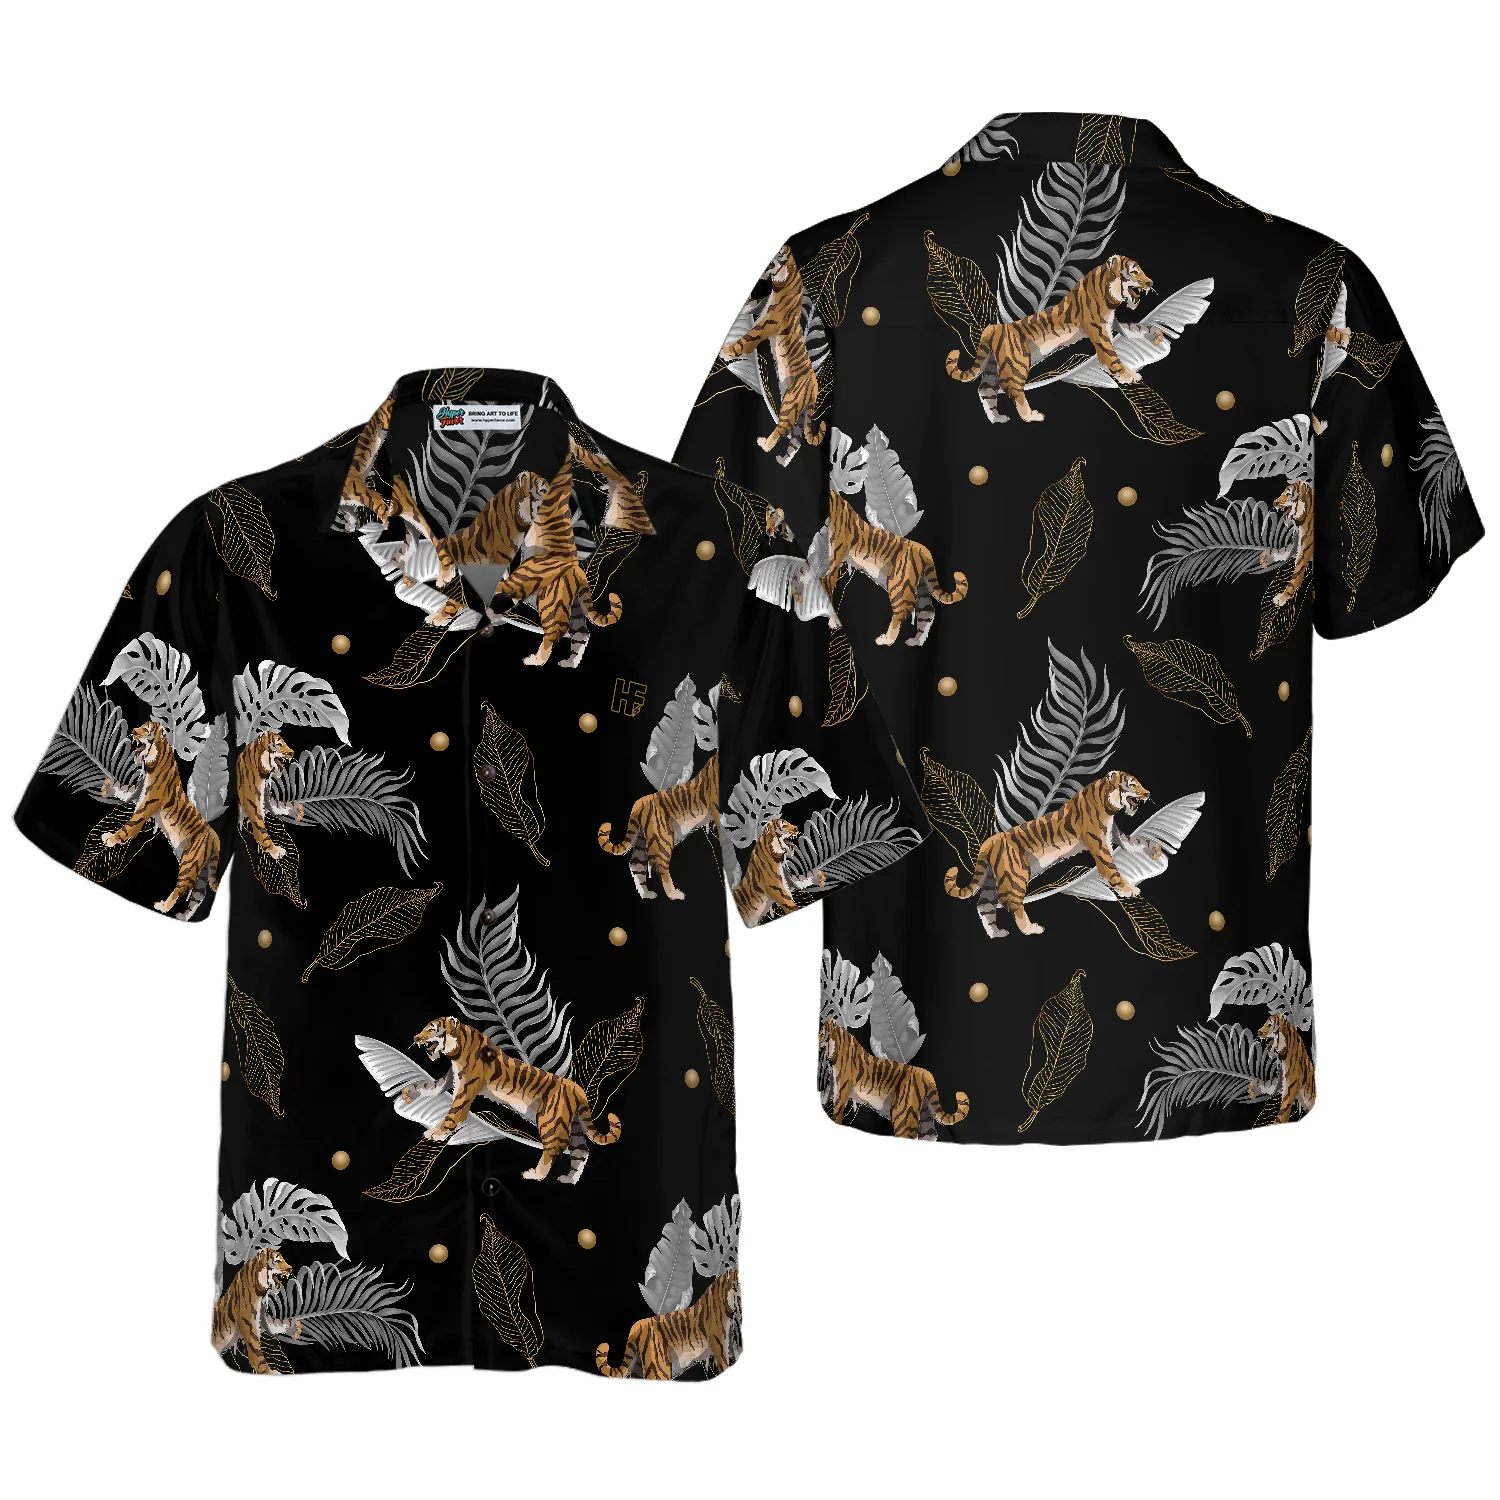 Tiger With Palm Leaves Shirt Hawaiian Shirt Aloha Shirt For Men and Women